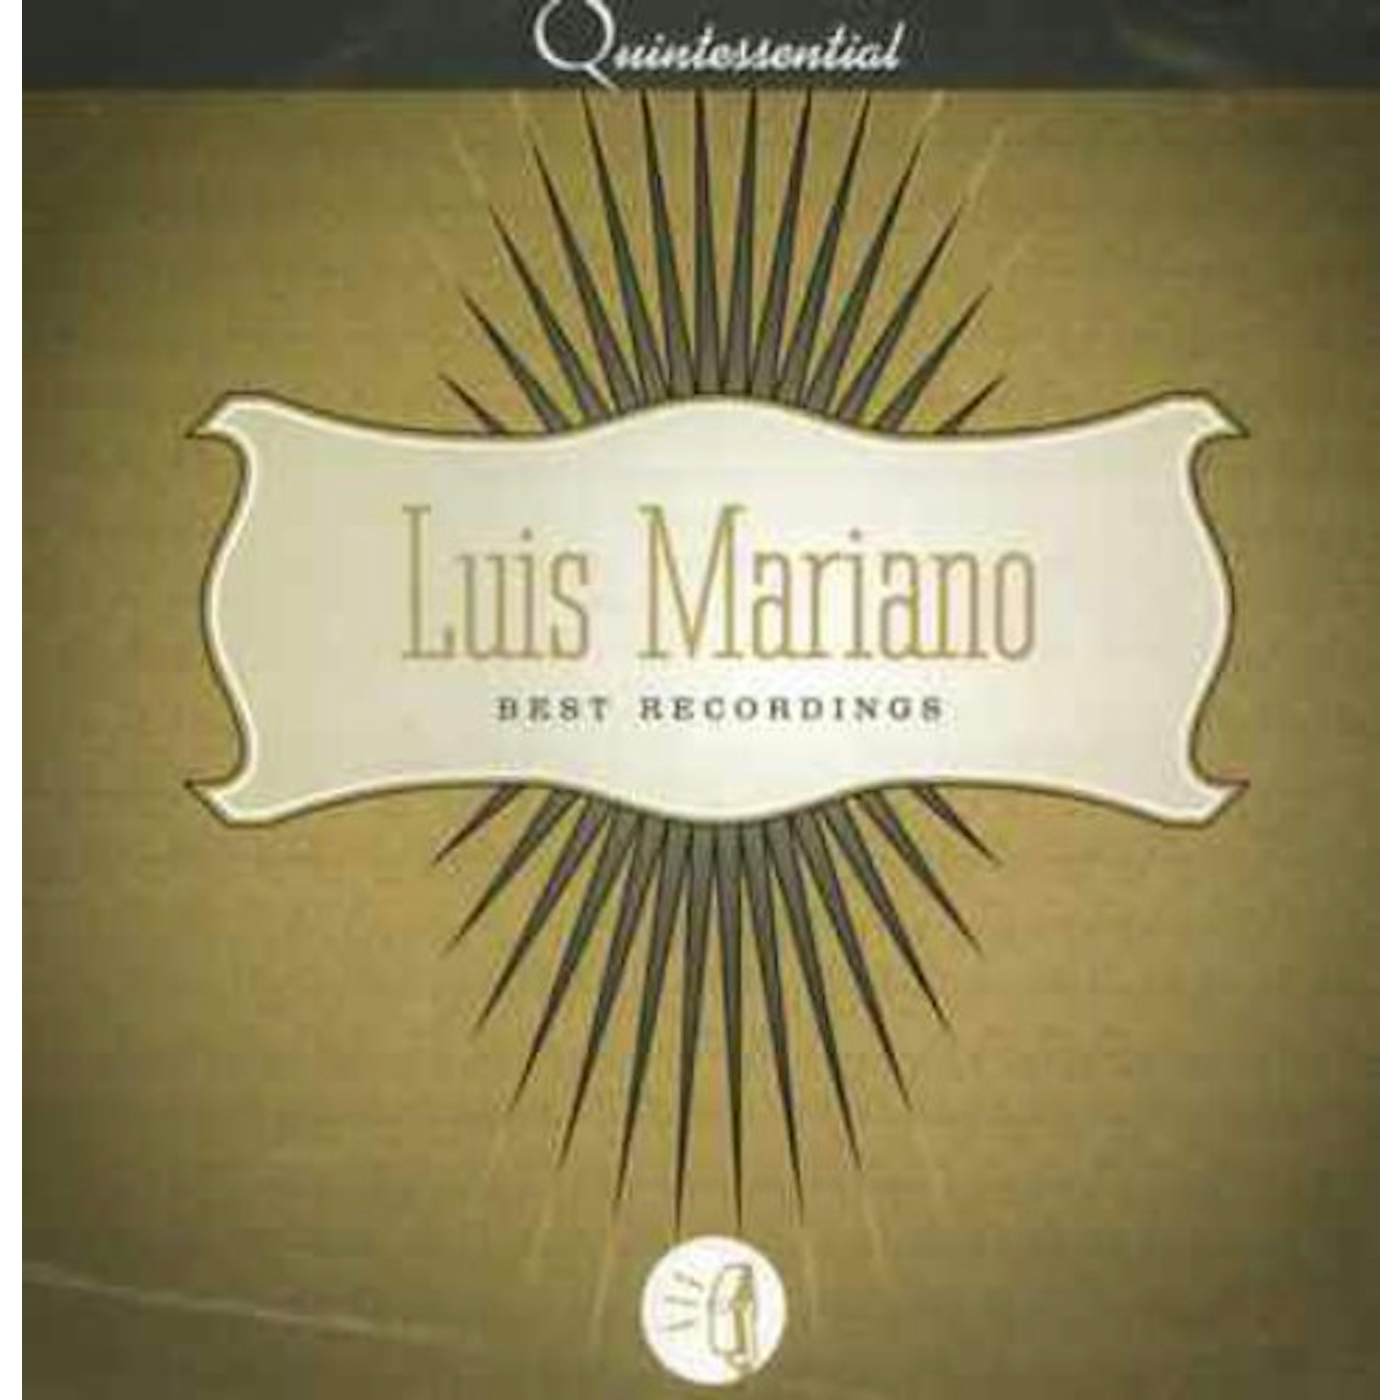 Luis Mariano BEST RECORDINGS 20 TRACKS CD